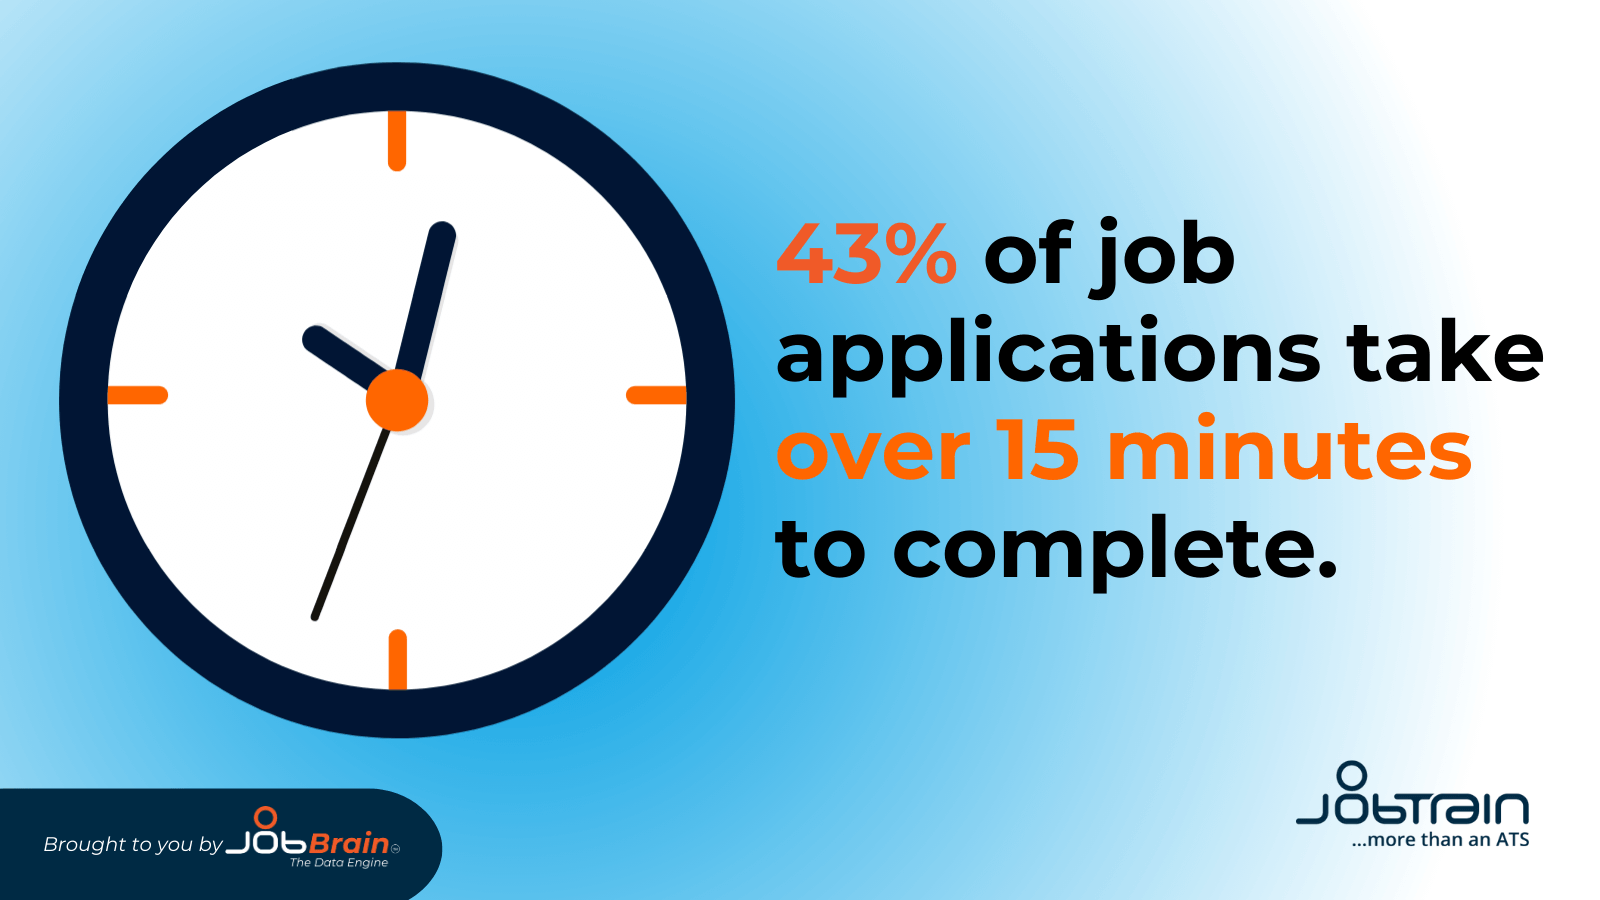 JobBrain - 43 percent of job applications take over 15 minutes to finish